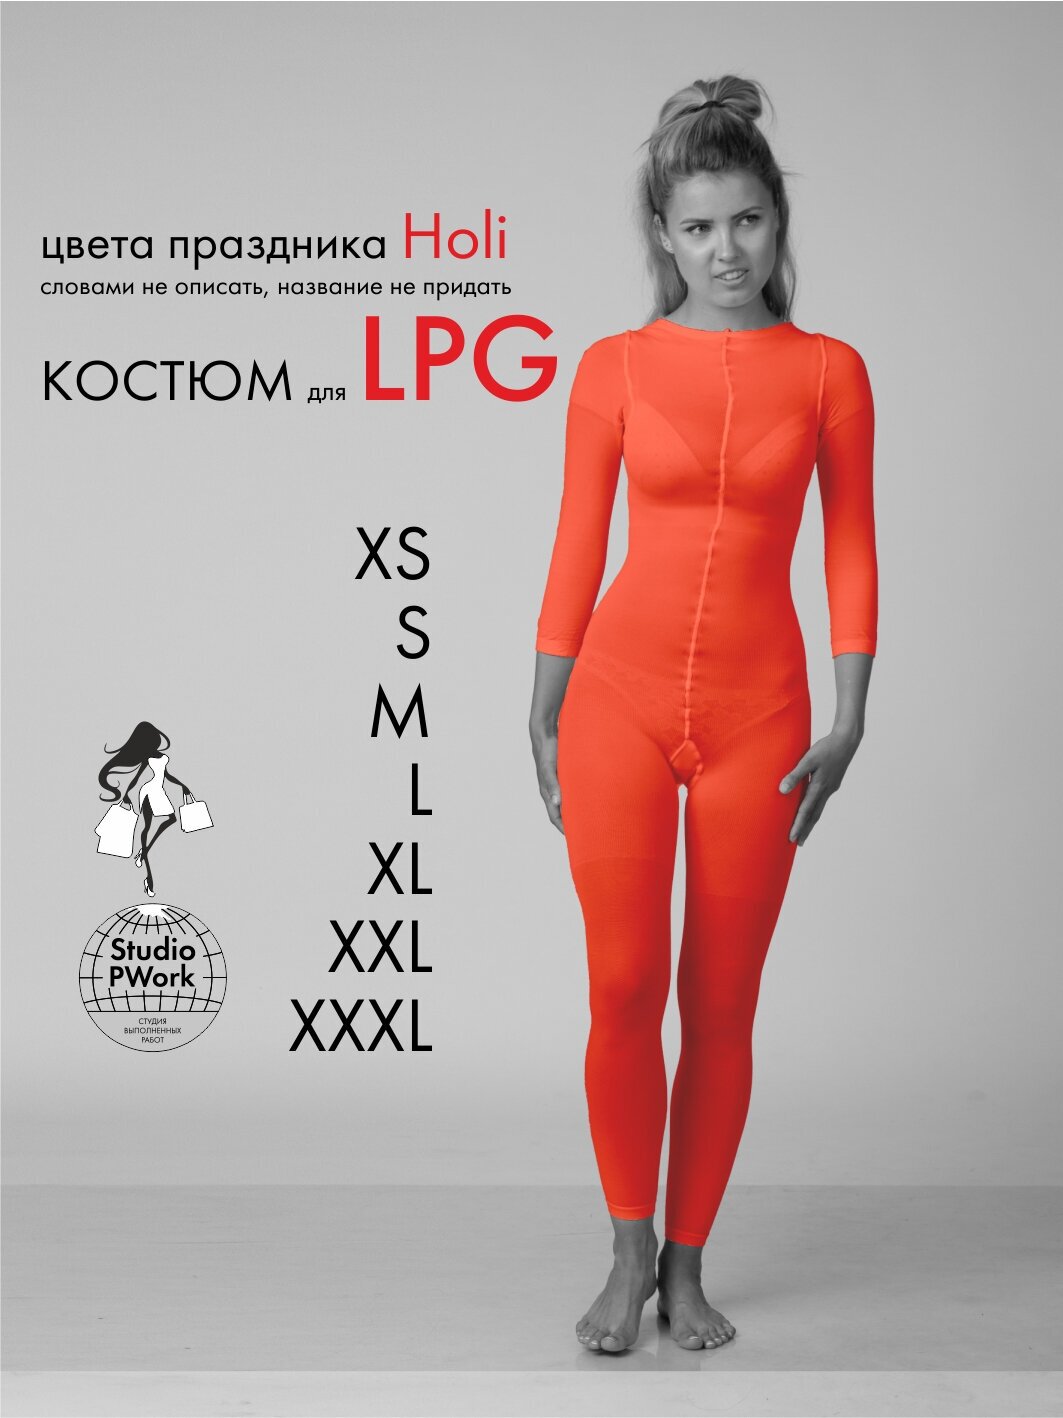 Набор: LPG костюм для LPG массажа, оранжевый, размер M, 46-48, 120 den LPG комбинезон лпж костюм